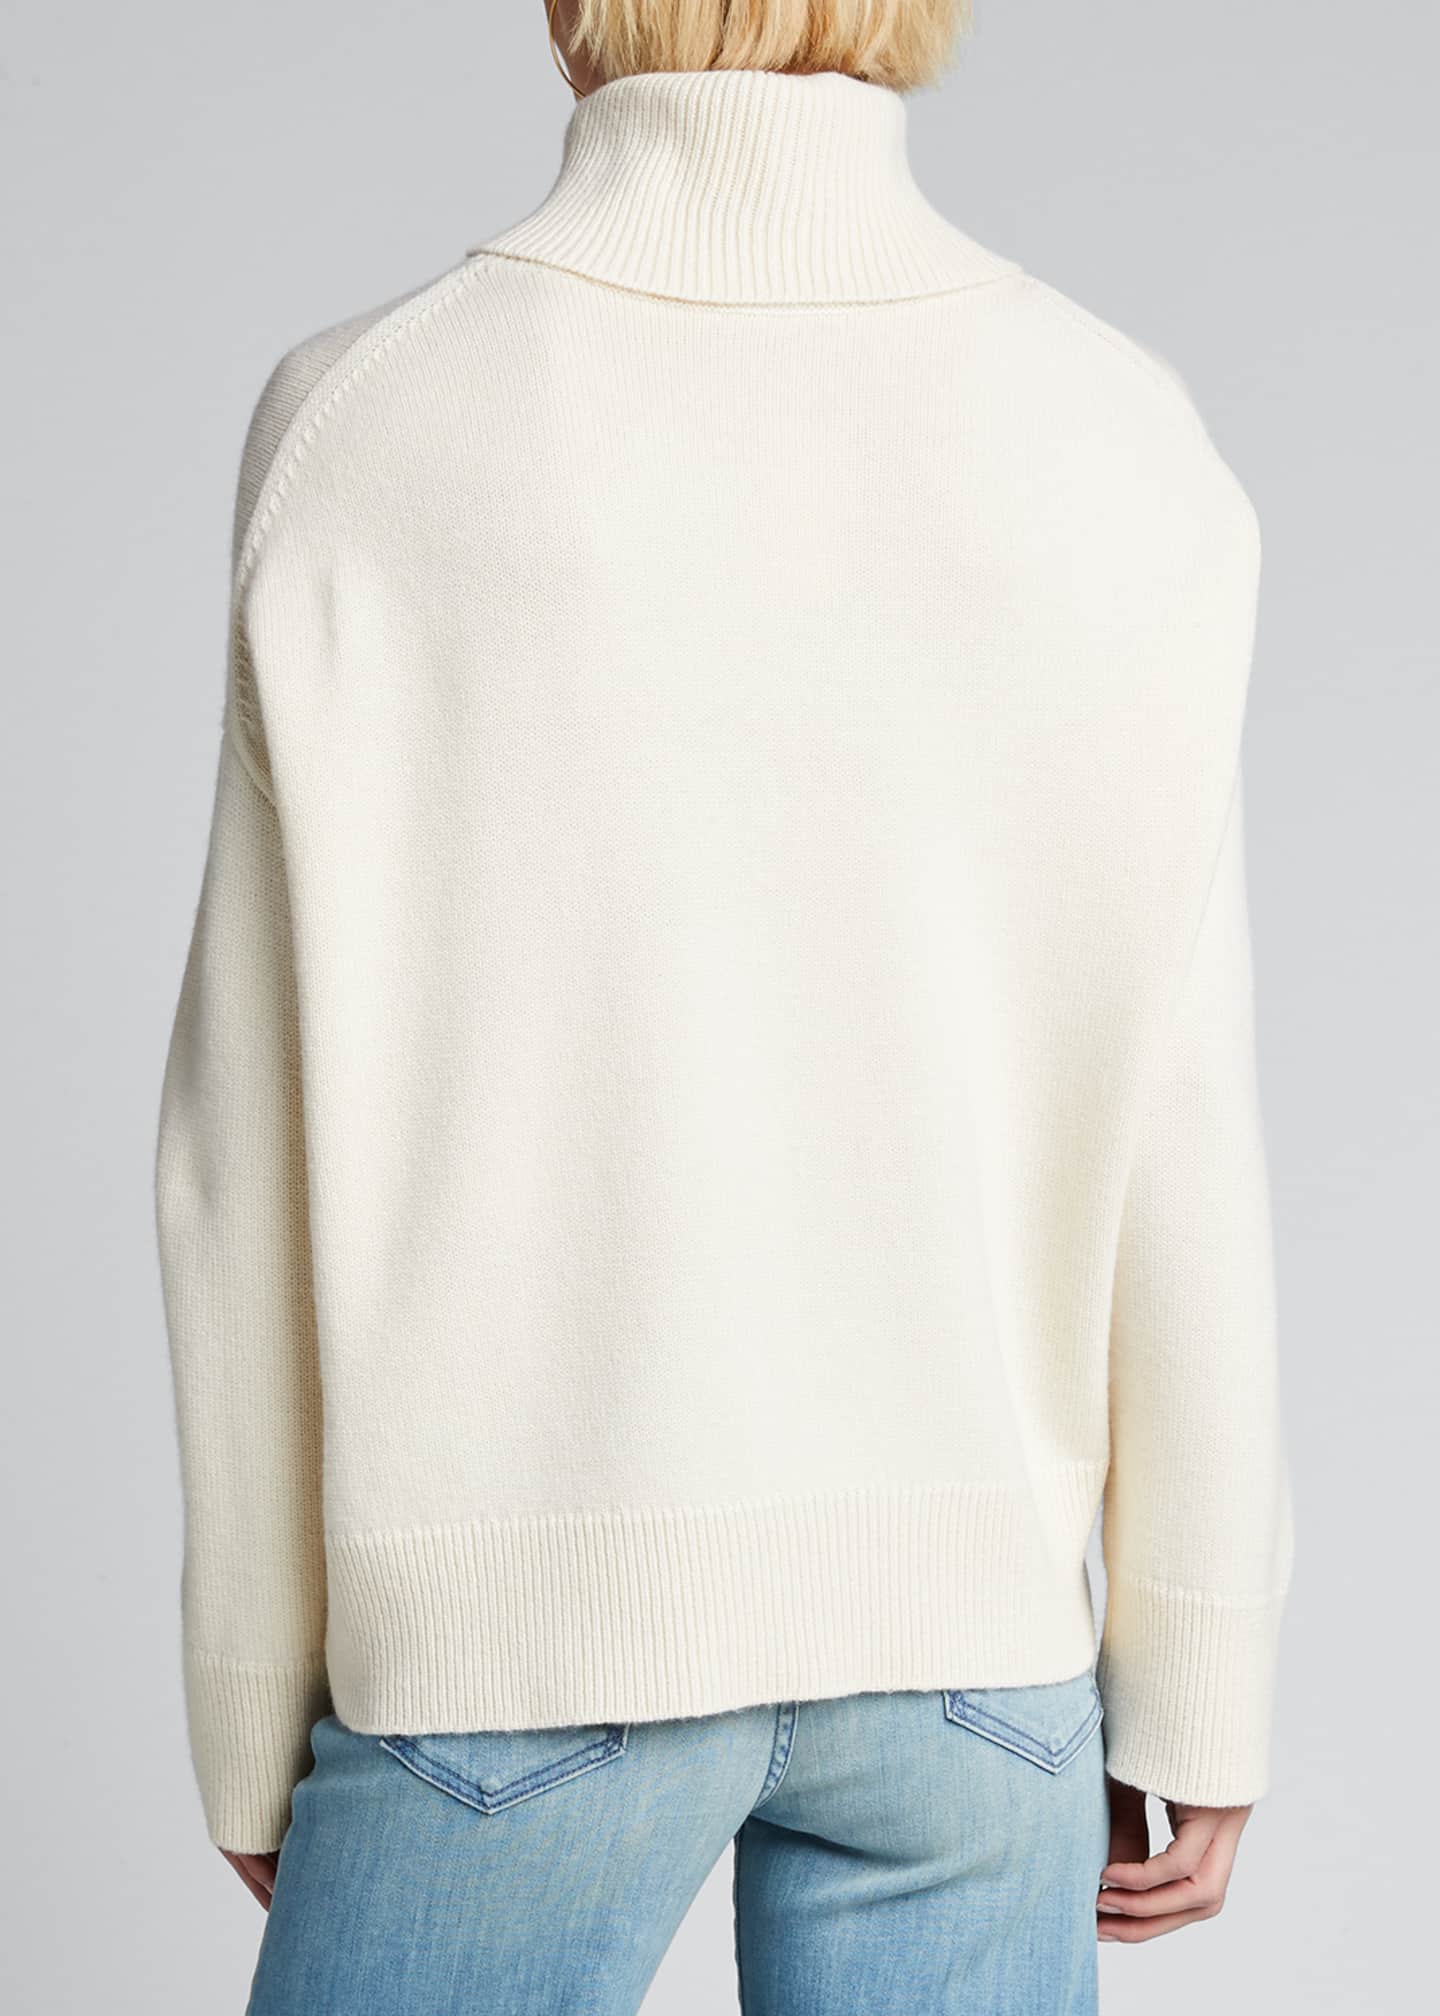 Co Wool/Cashmere Knit Turtleneck Sweater - Bergdorf Goodman